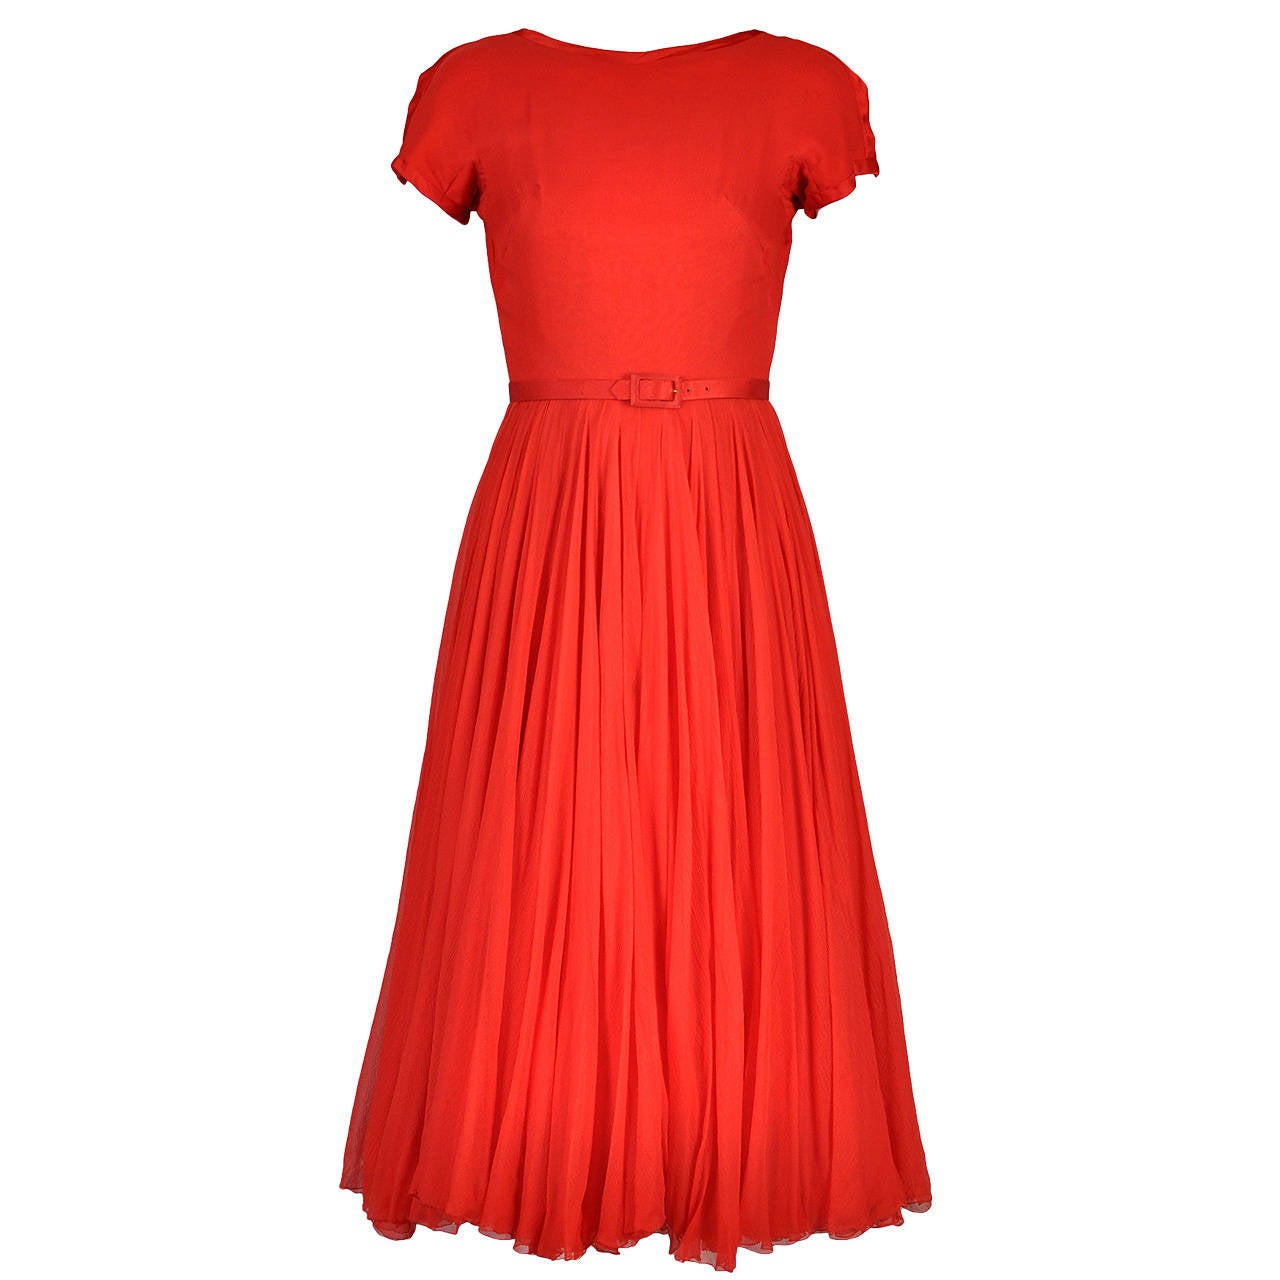 Circa 1951 James Galanos Cherry Red Silk Chiffon Party Dress